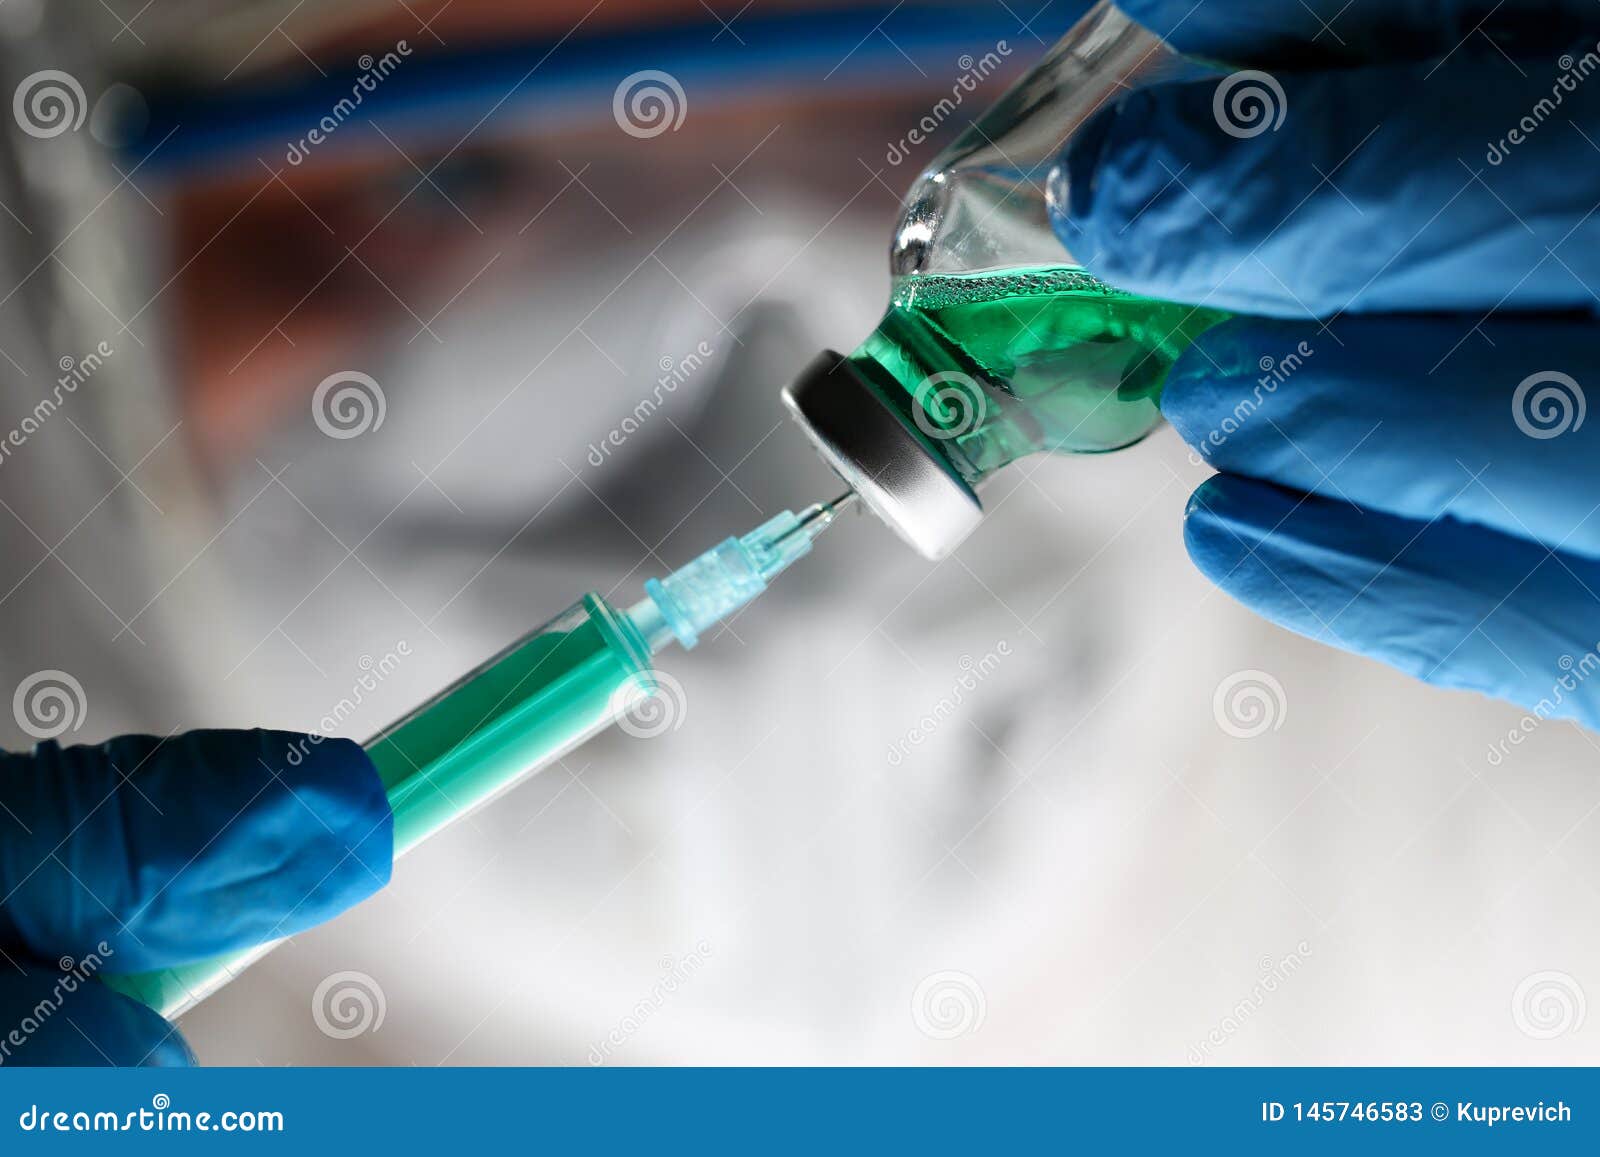 pharmacist syringe dosing green liquid vaccine